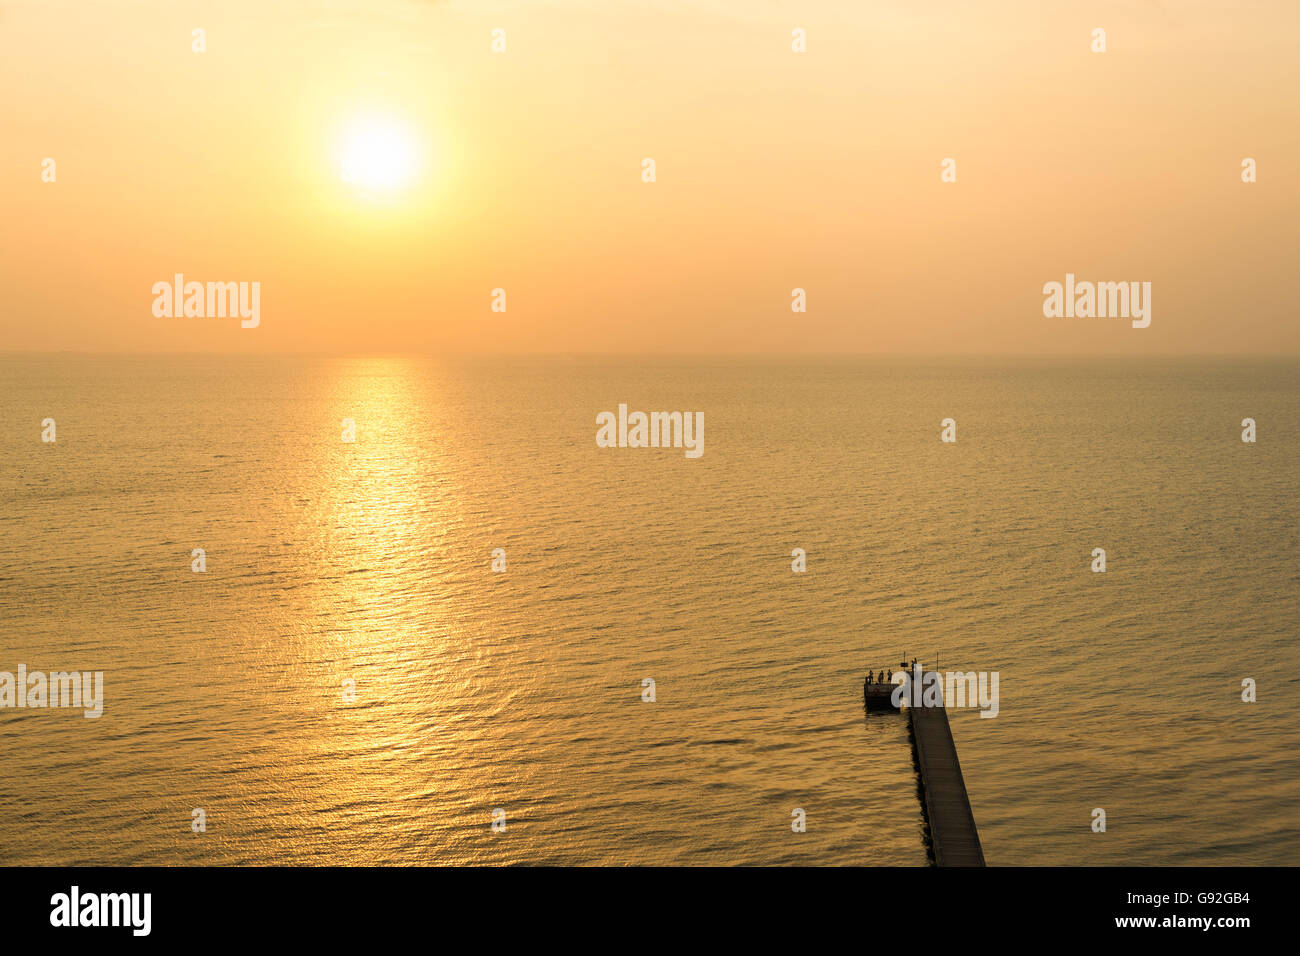 Wooden pier at Samui island at sunset or sunrise Stock Photo